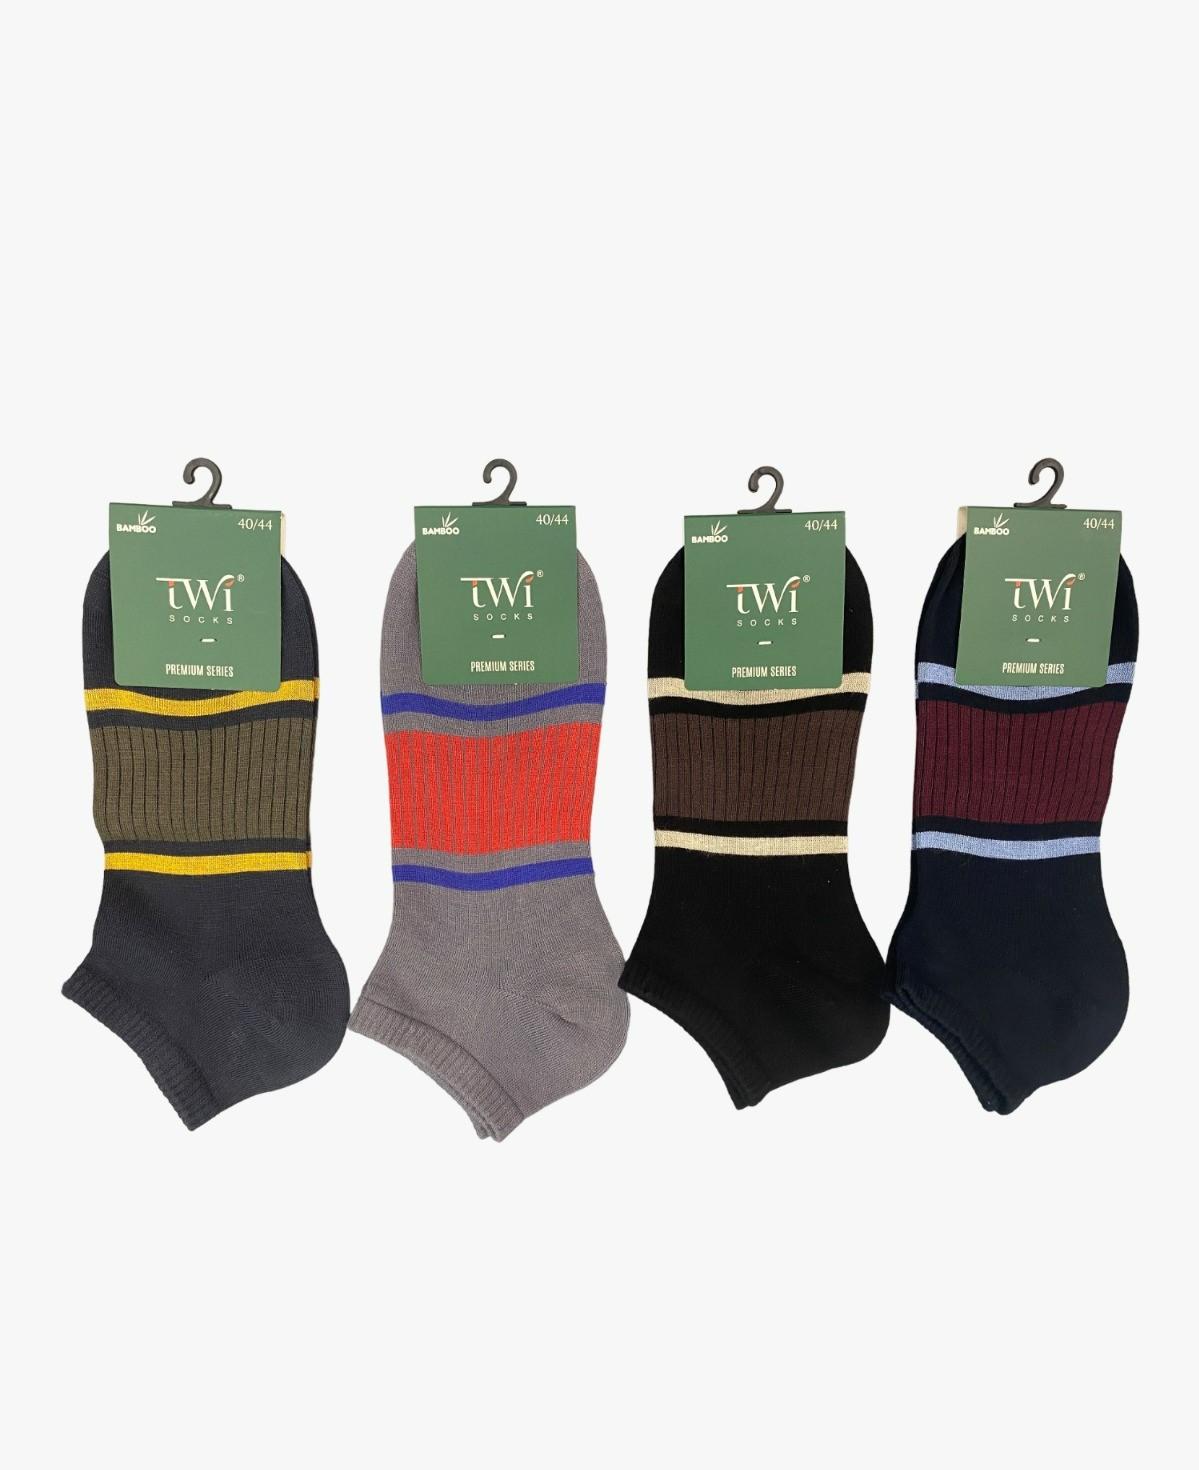 Selected image for TWISOCKS Muške čarape Bambus Premijum 401 4/1